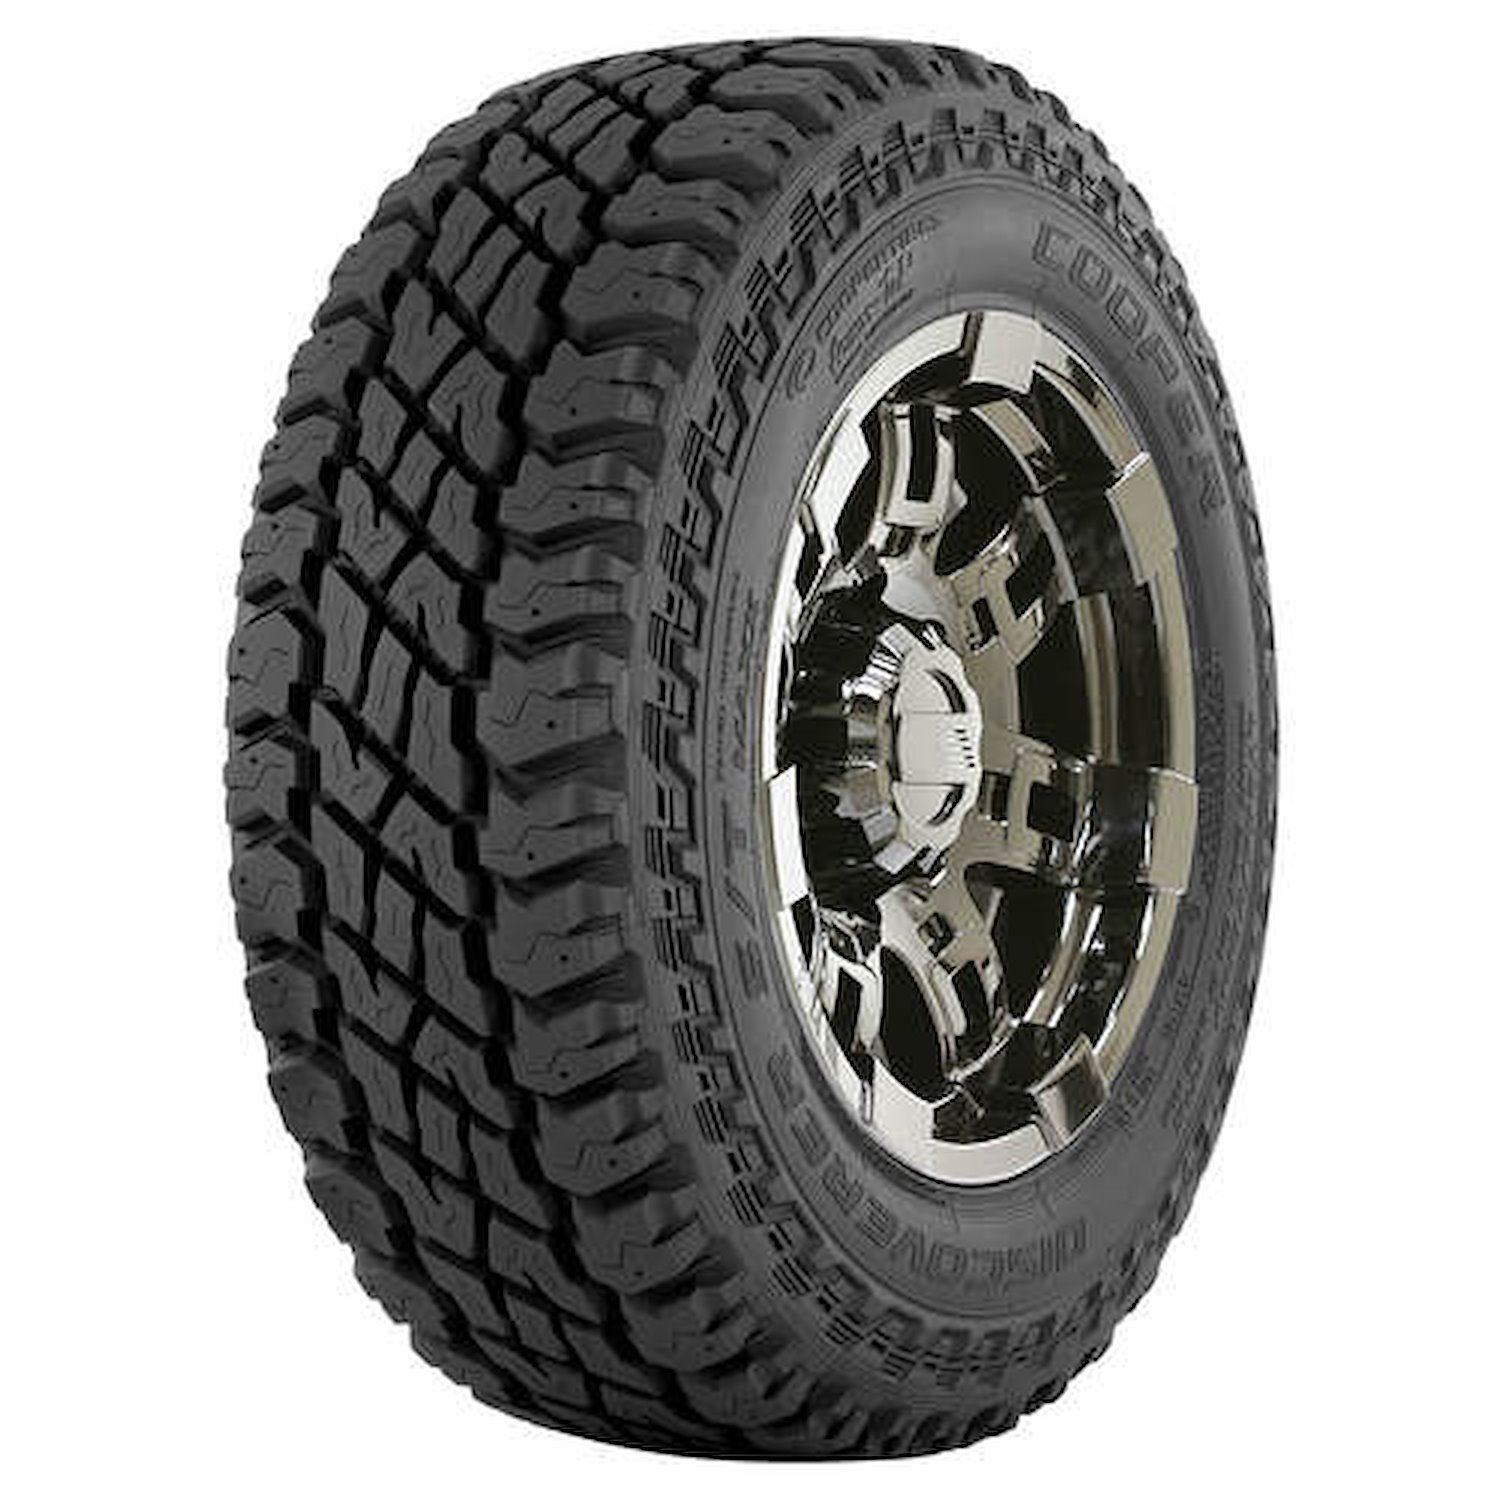 Discoverer S/T Maxx All-Terrain Tire, LT275/70R17